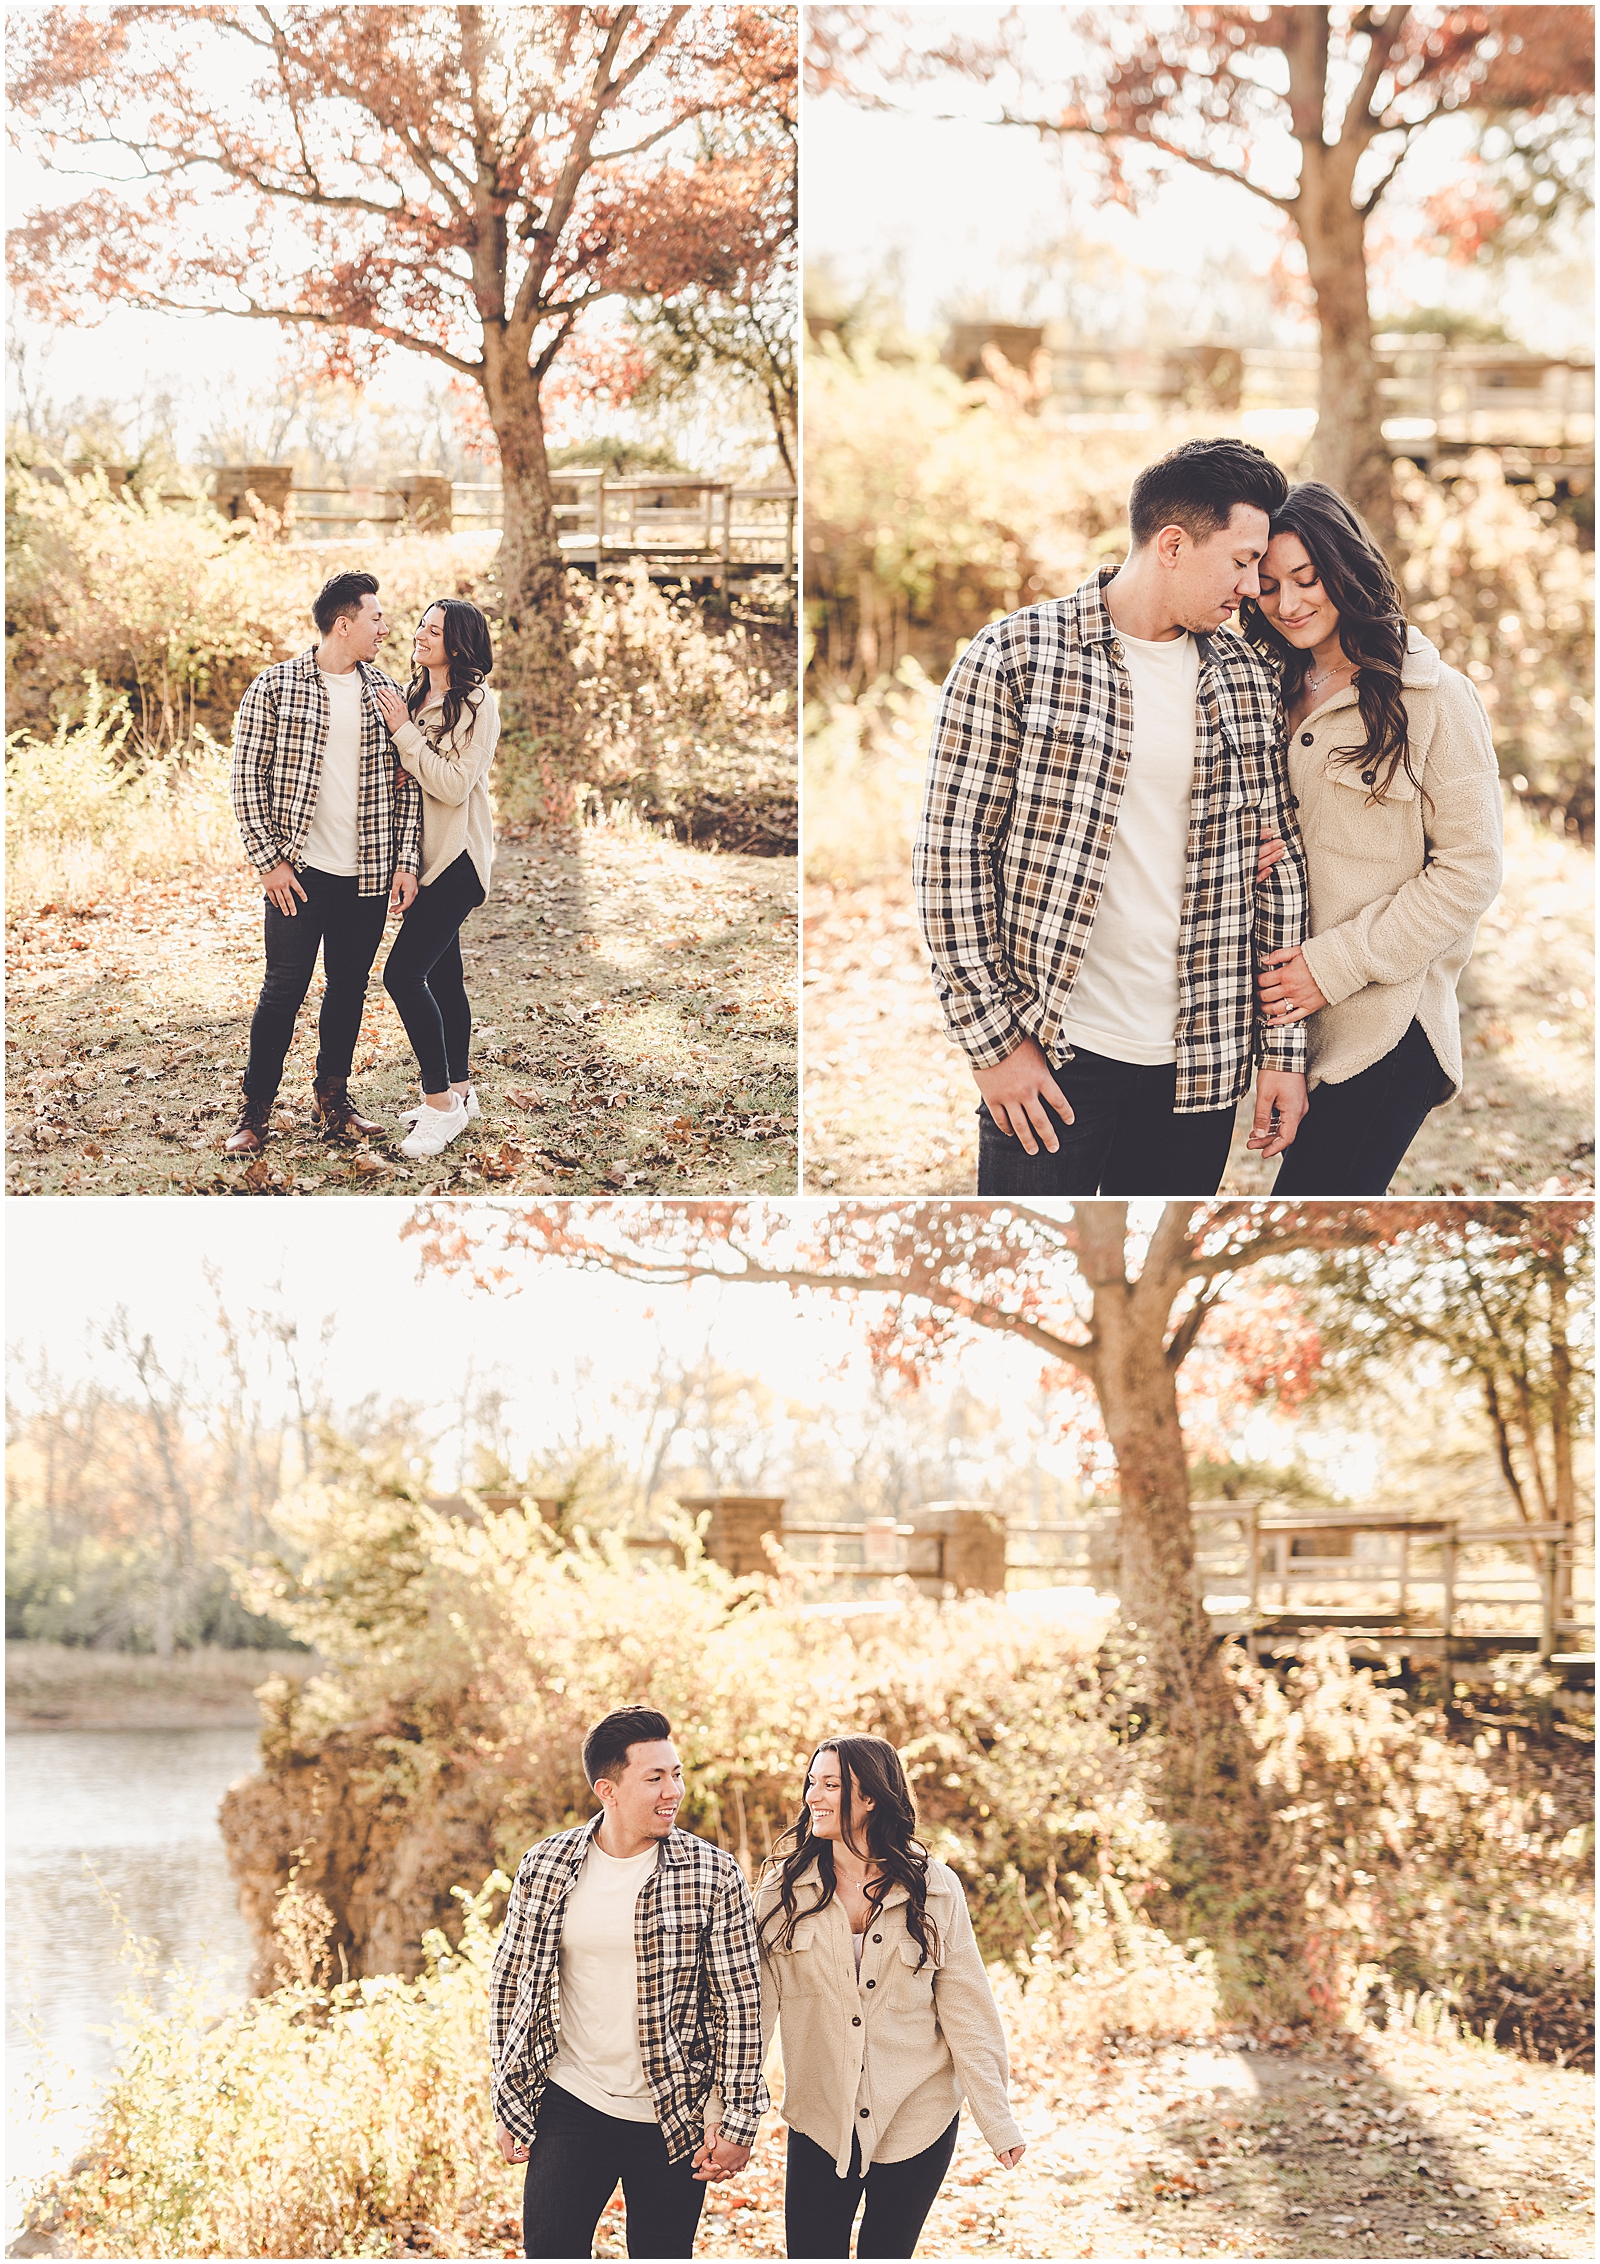 Alyssa & Paul's engagement photos at the Kankakee River State Park in Bourbonnais with Chicago wedding photographer Kara Evans Photographer.